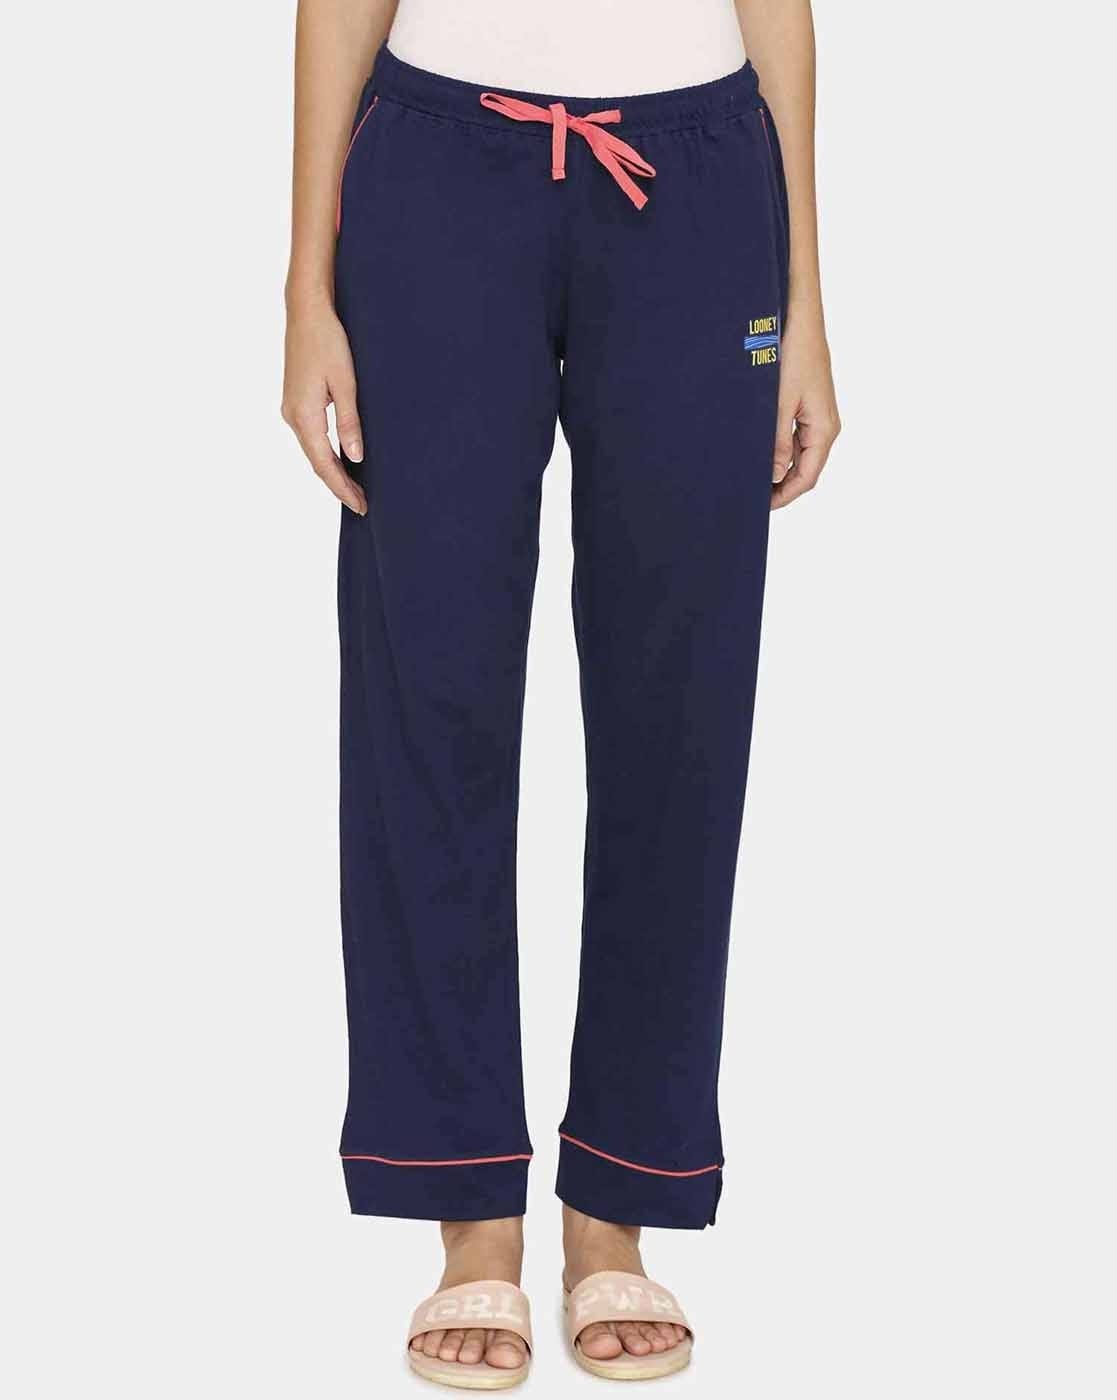 Buy Pyjamas At Zivame At Vega City Mall Bannerghatta Road